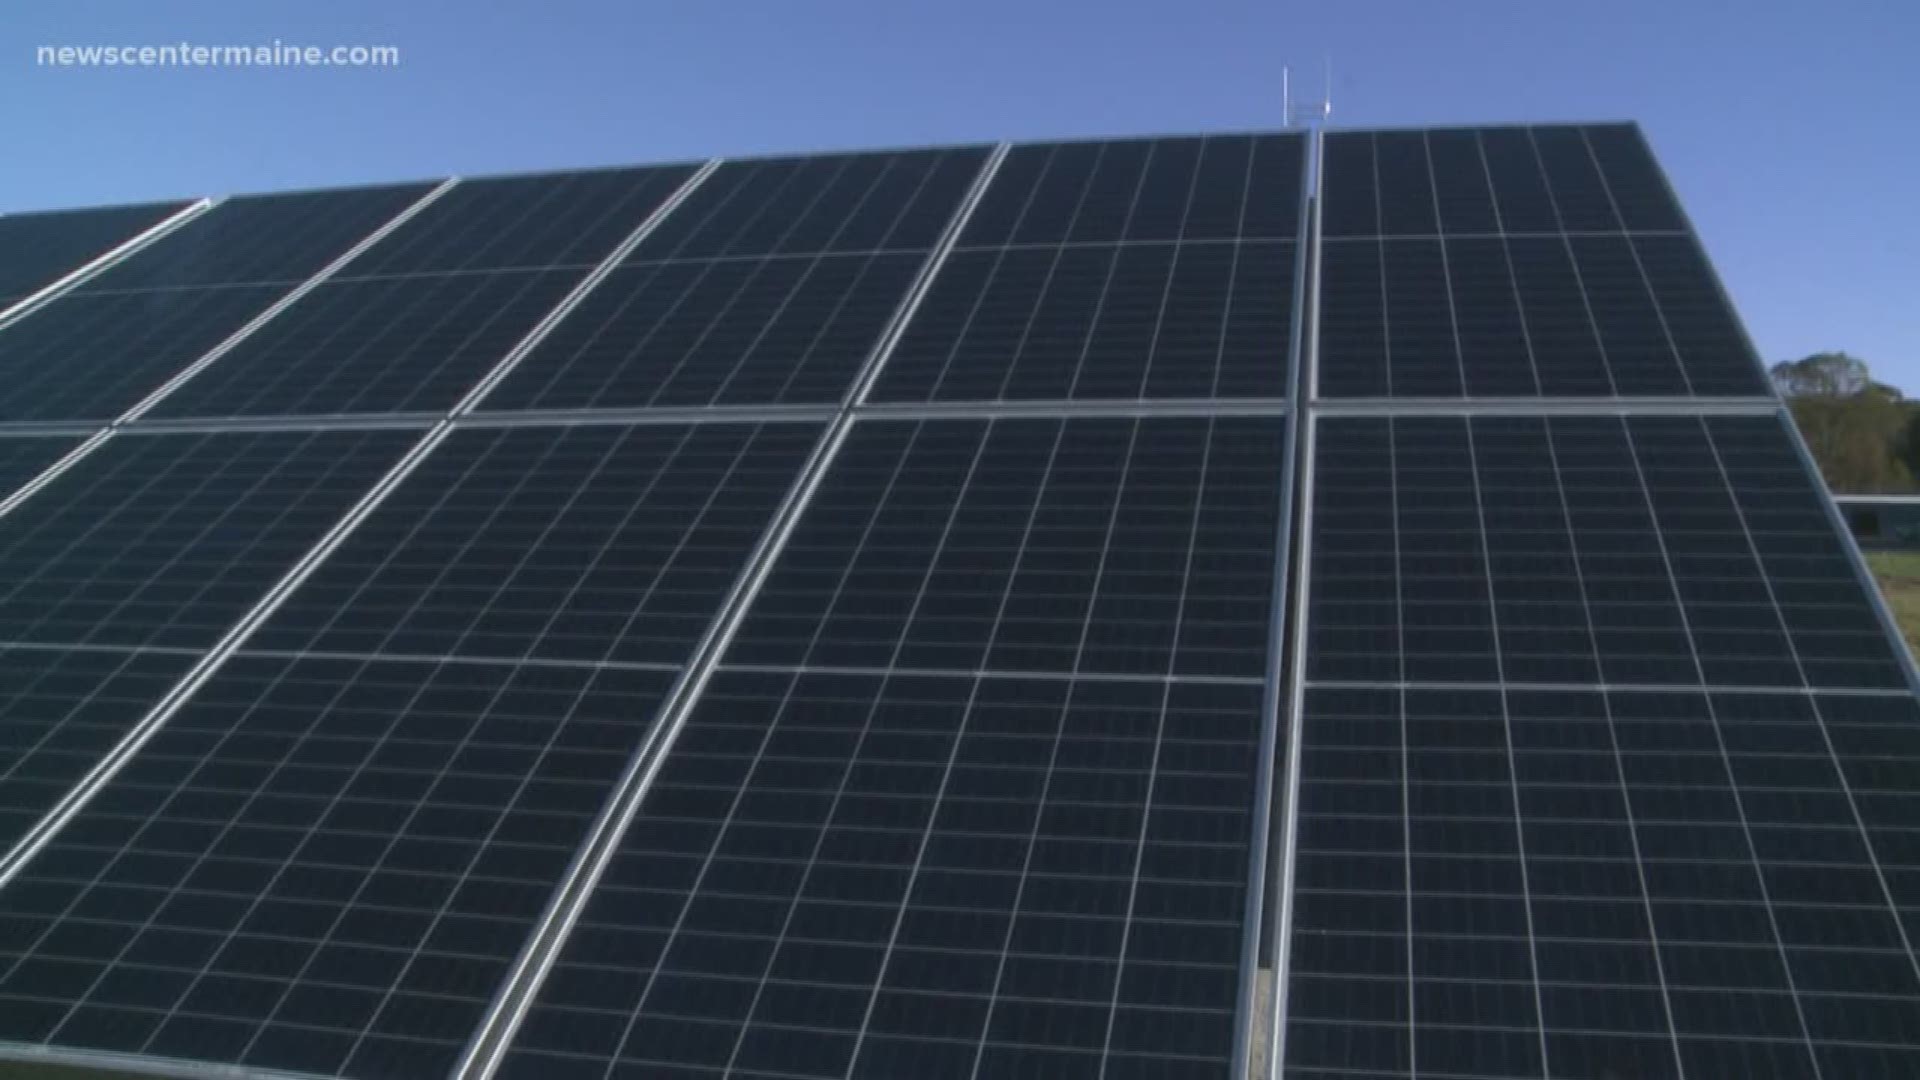 The city of Bangor is taking steps toward going solar.